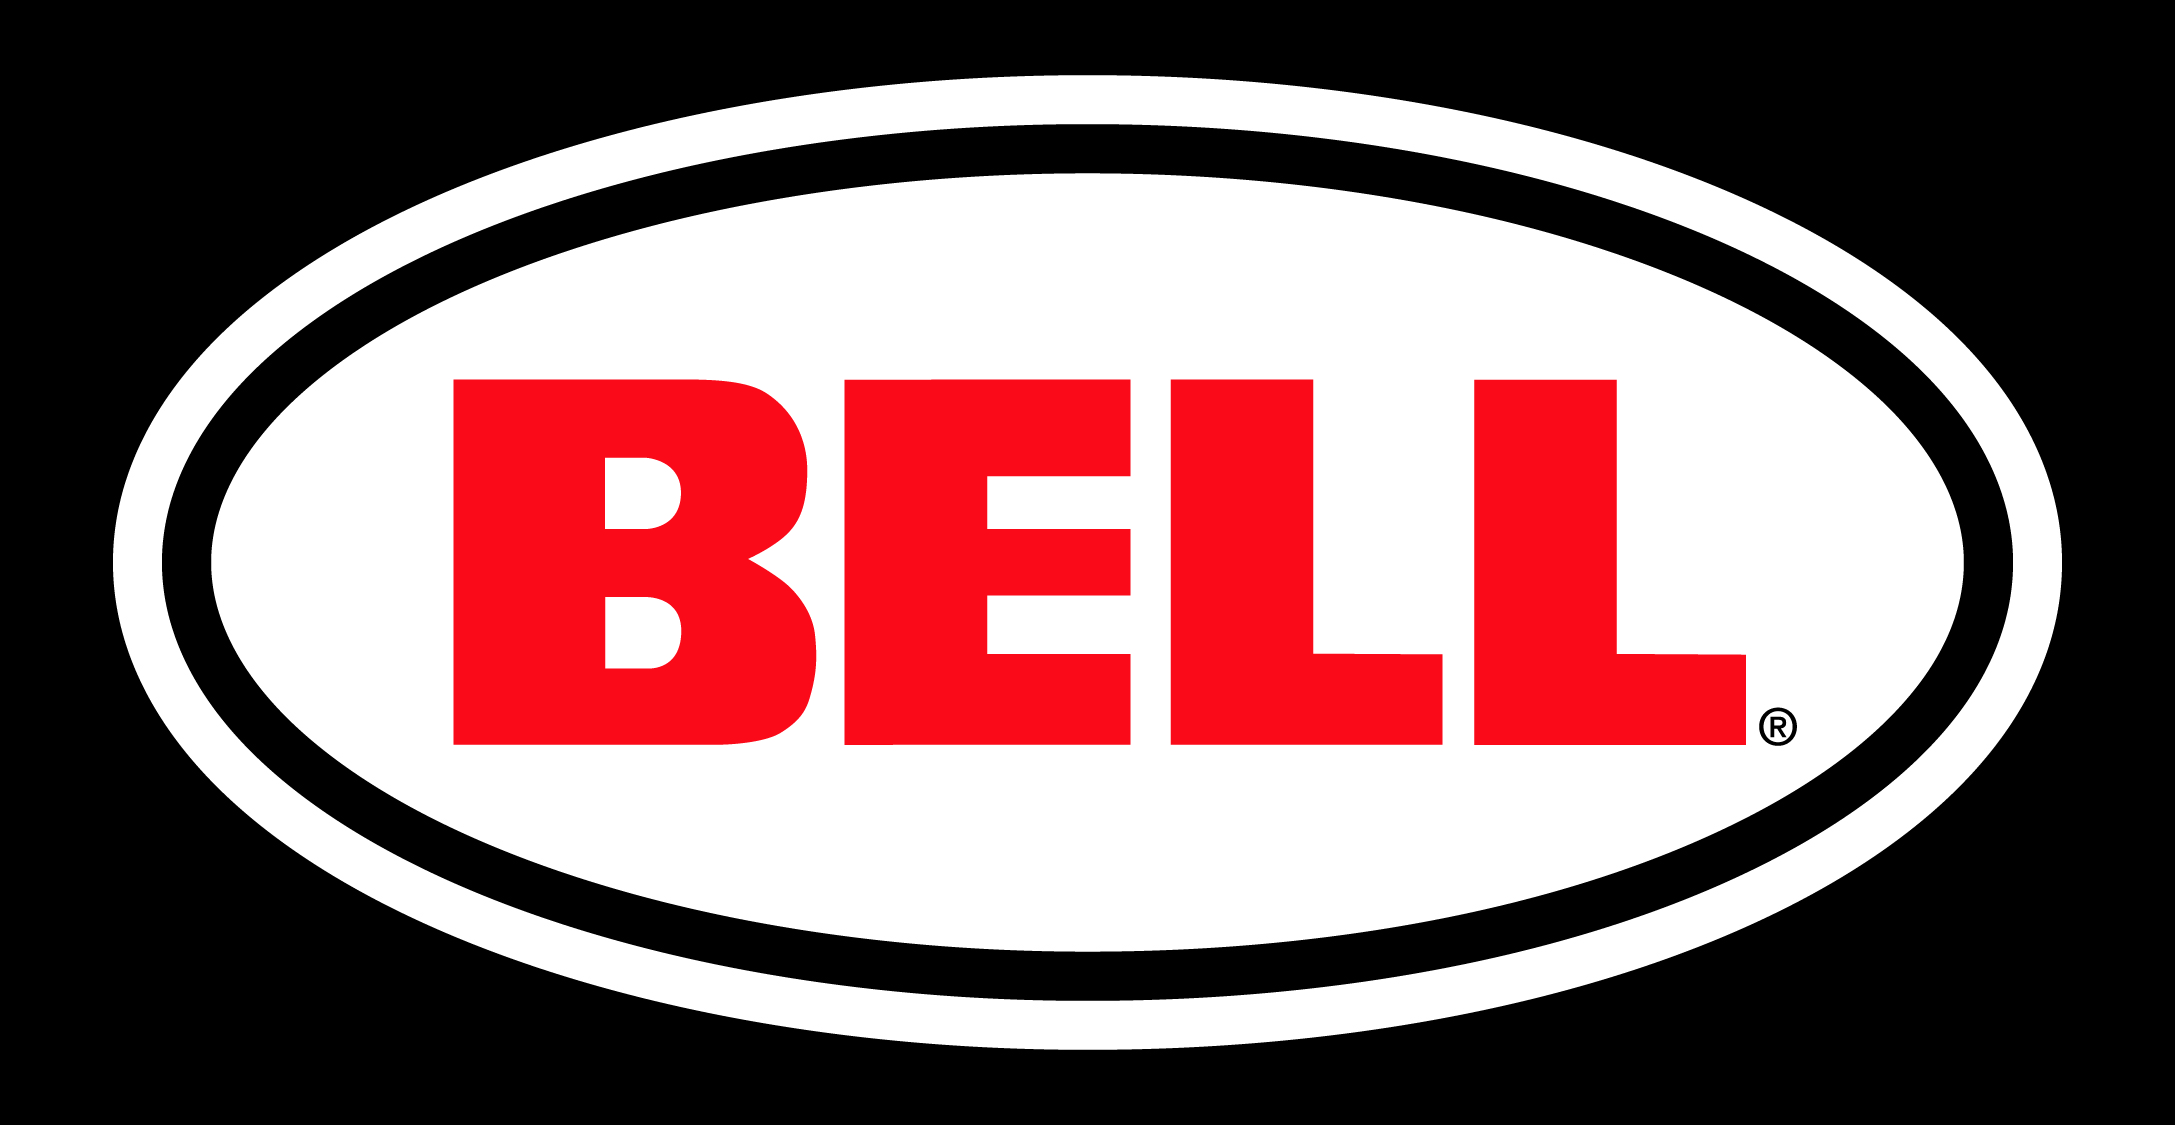 Copy of bell-logo.jpg